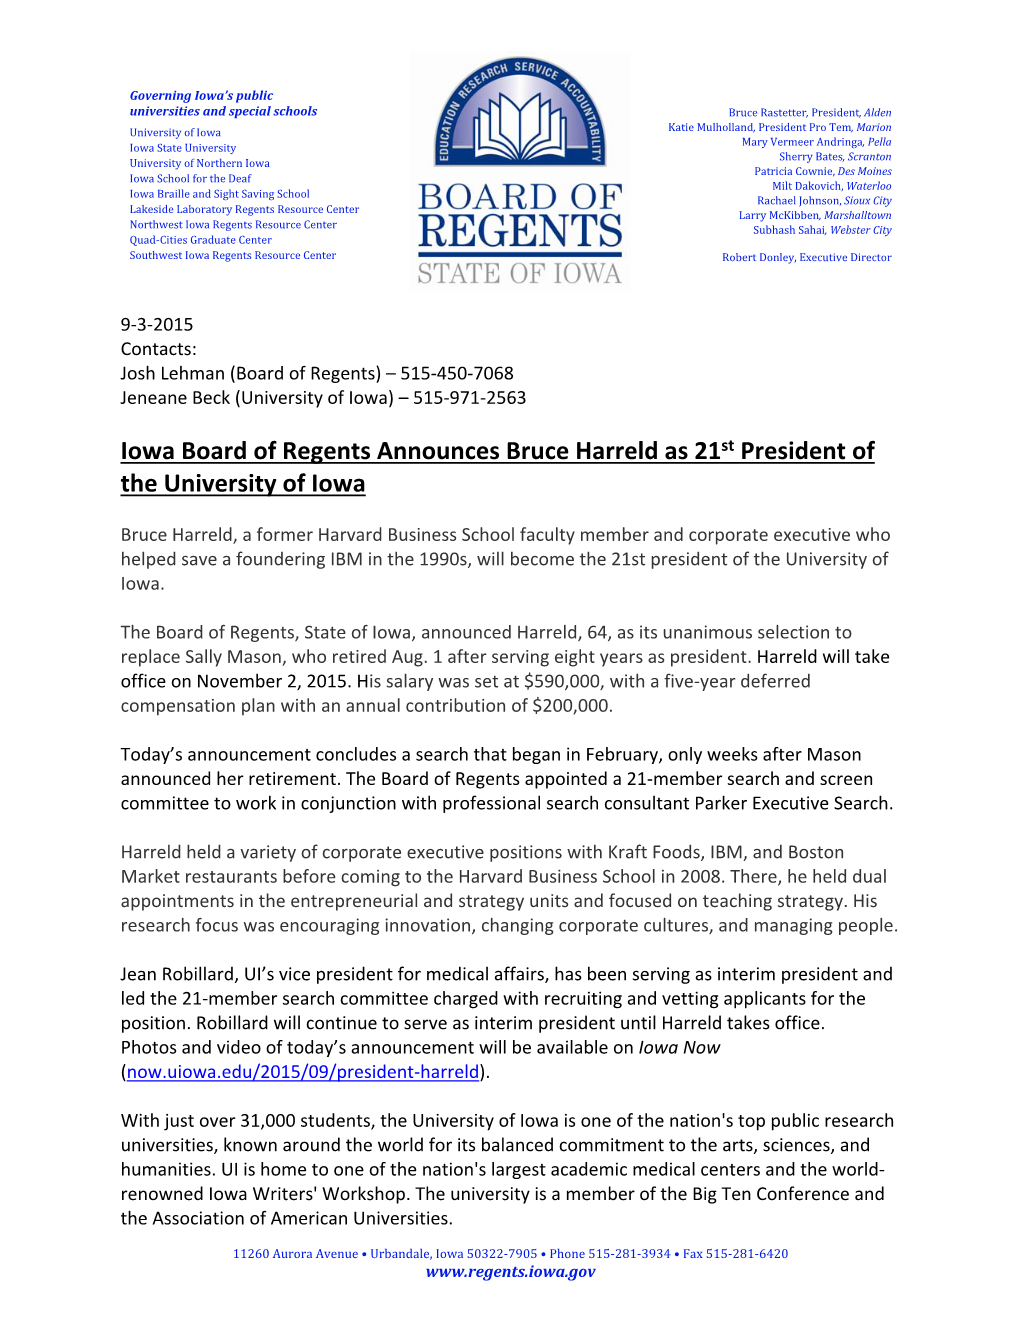 Iowa Board of Regents Announces Bruce Harreld As 21St President of the University of Iowa